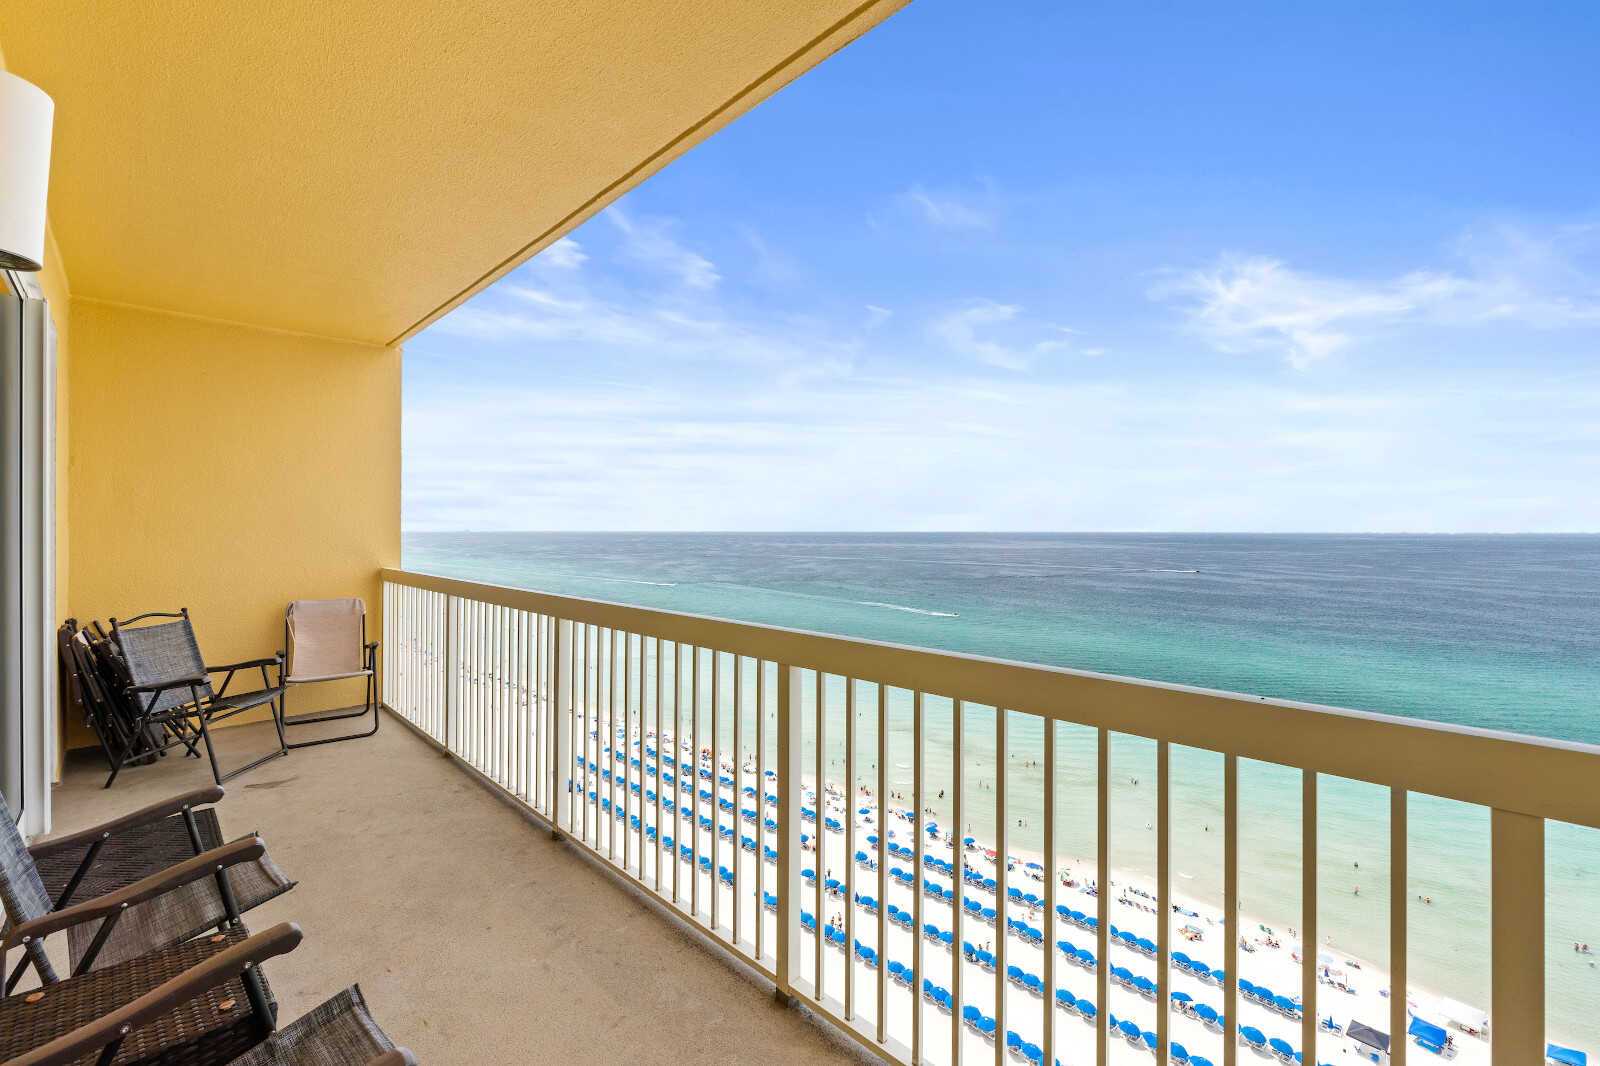 calypso-beach-resort-3-bedroom-condo-rental-1708w-by-panhandle-getaways-26